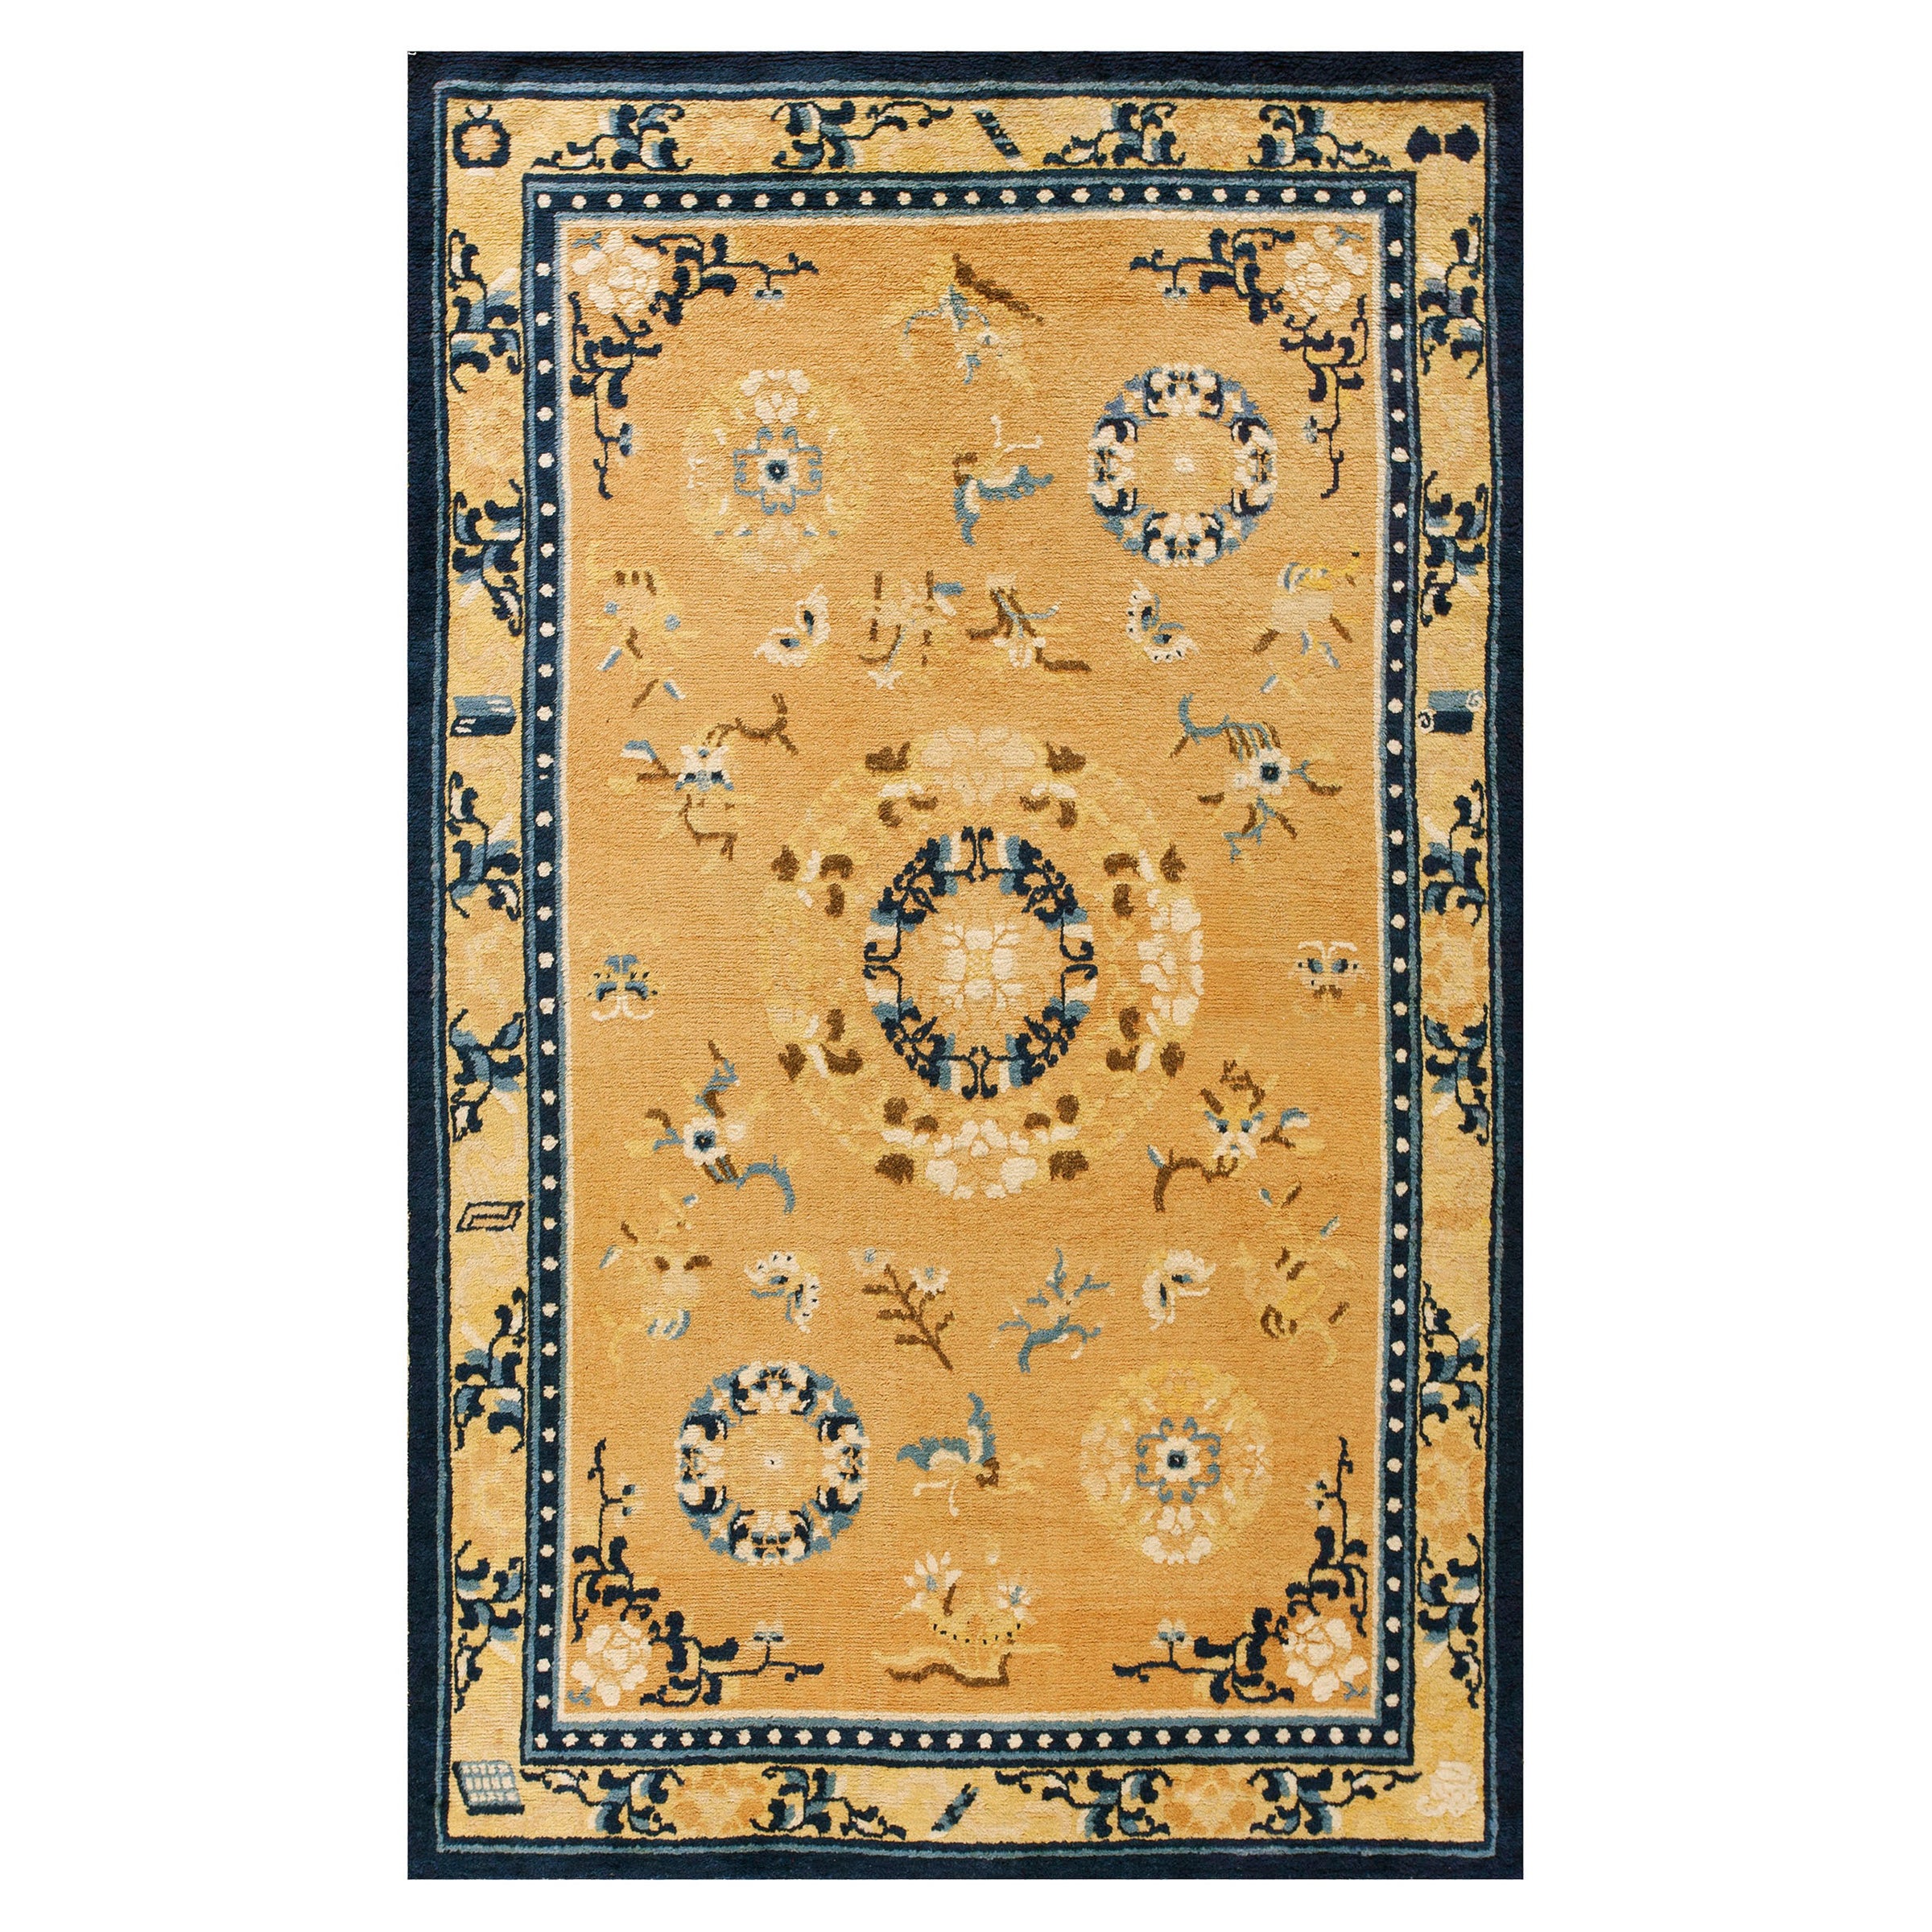 Late 18th Century Chinese Ningxia Carpet ( 5' x 8' 1'' - 152 x 246 cm )